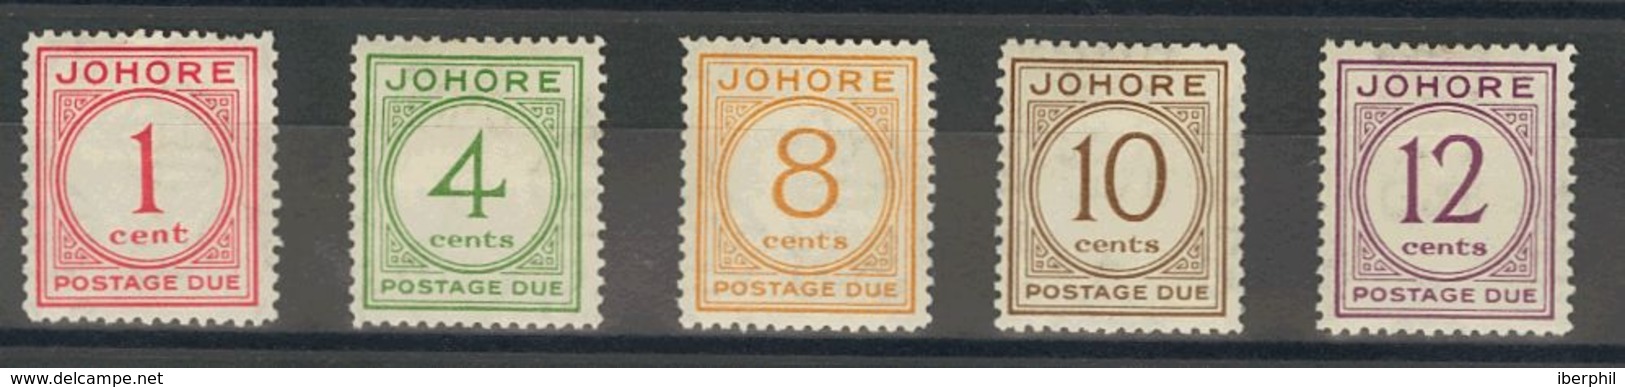 Malasia-Johore, Tasas. MH *Yv 1/5. 1938. Serie Completa. MAGNIFICA. (SGD1/5 200£) Yvert 2008: 270 Euros. - Johore